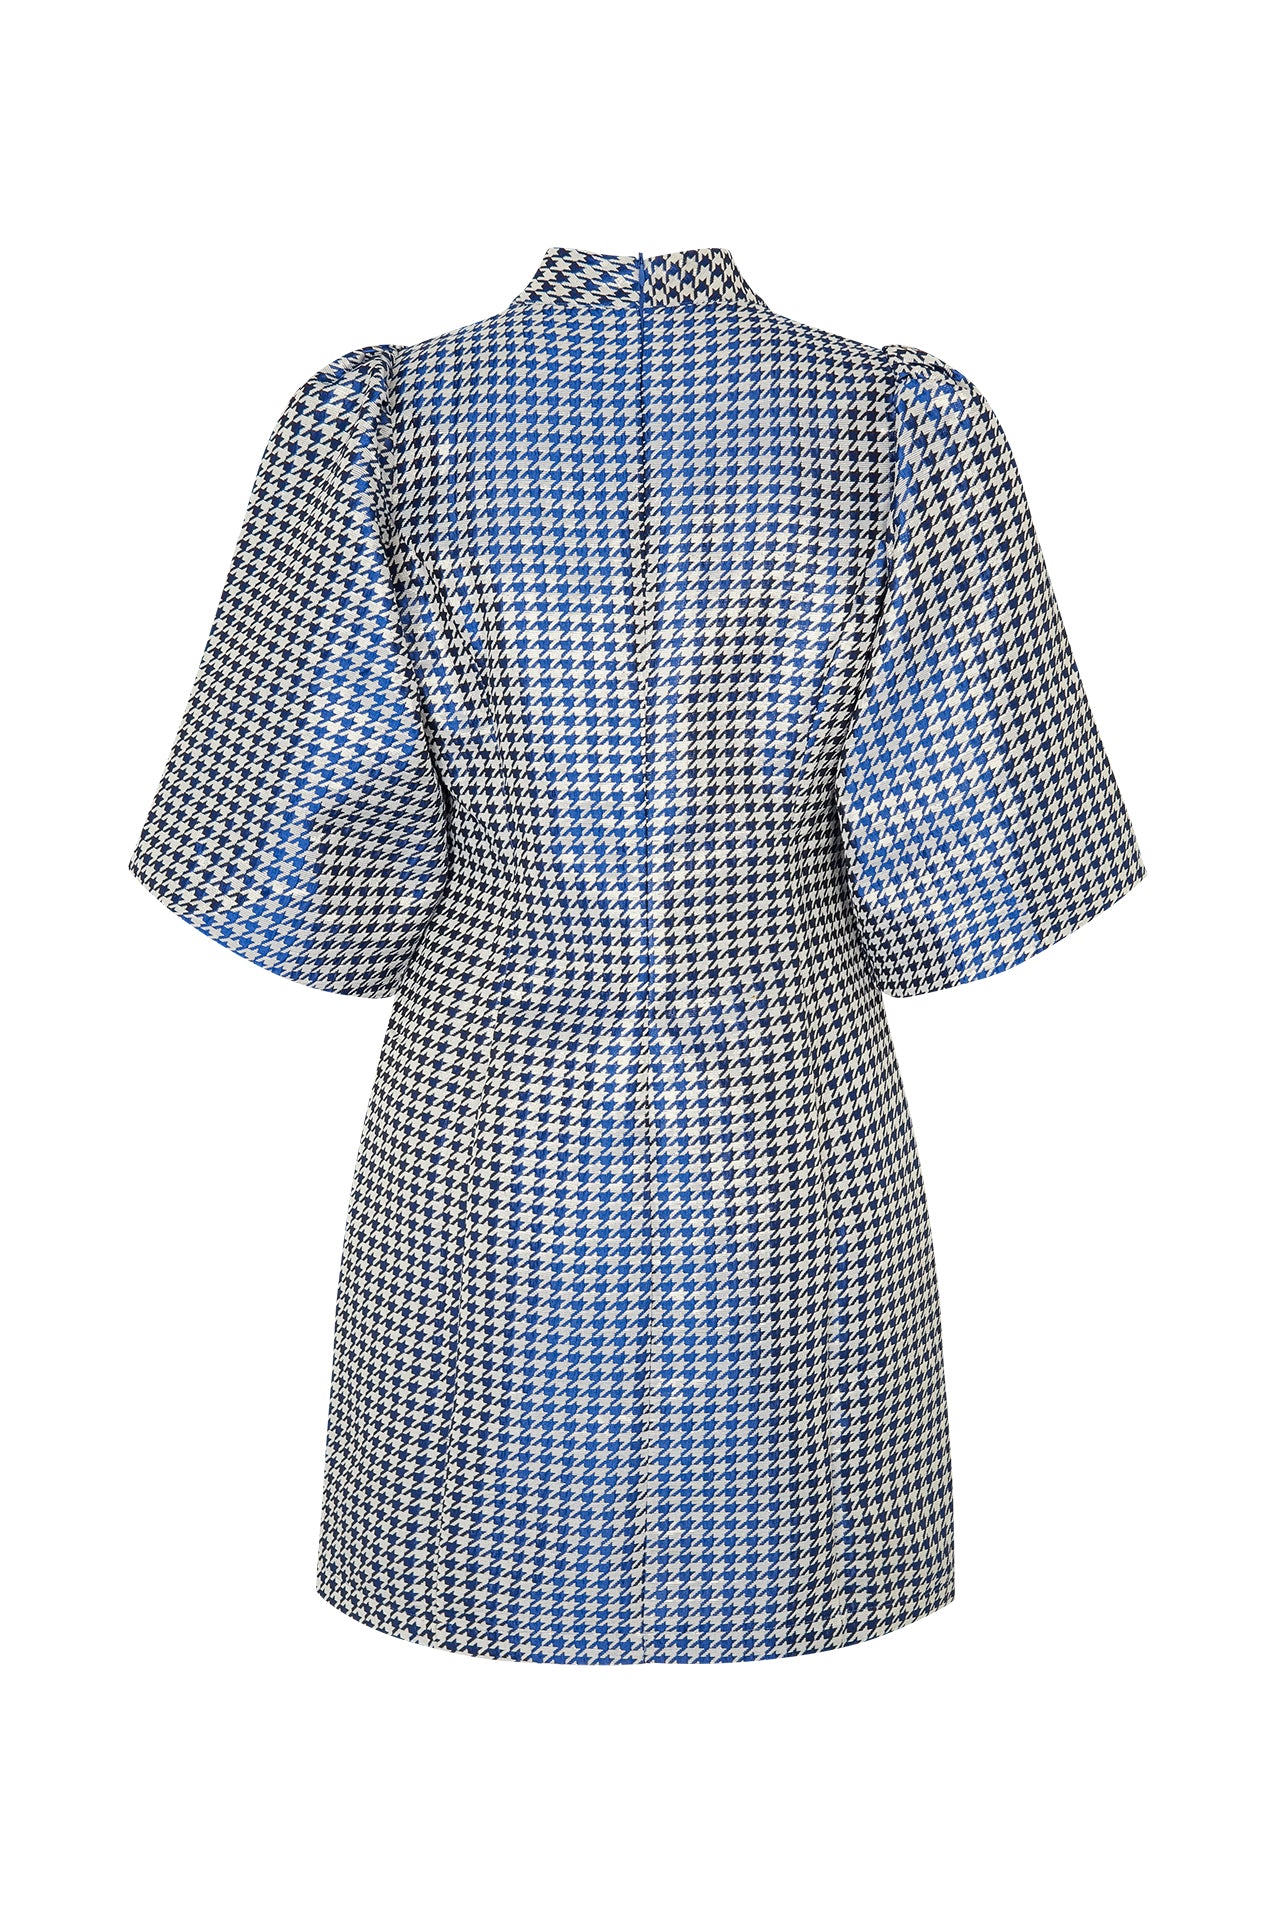 Lollys Laundry LausanneLL Short Dress SS Dress 79 Check Print